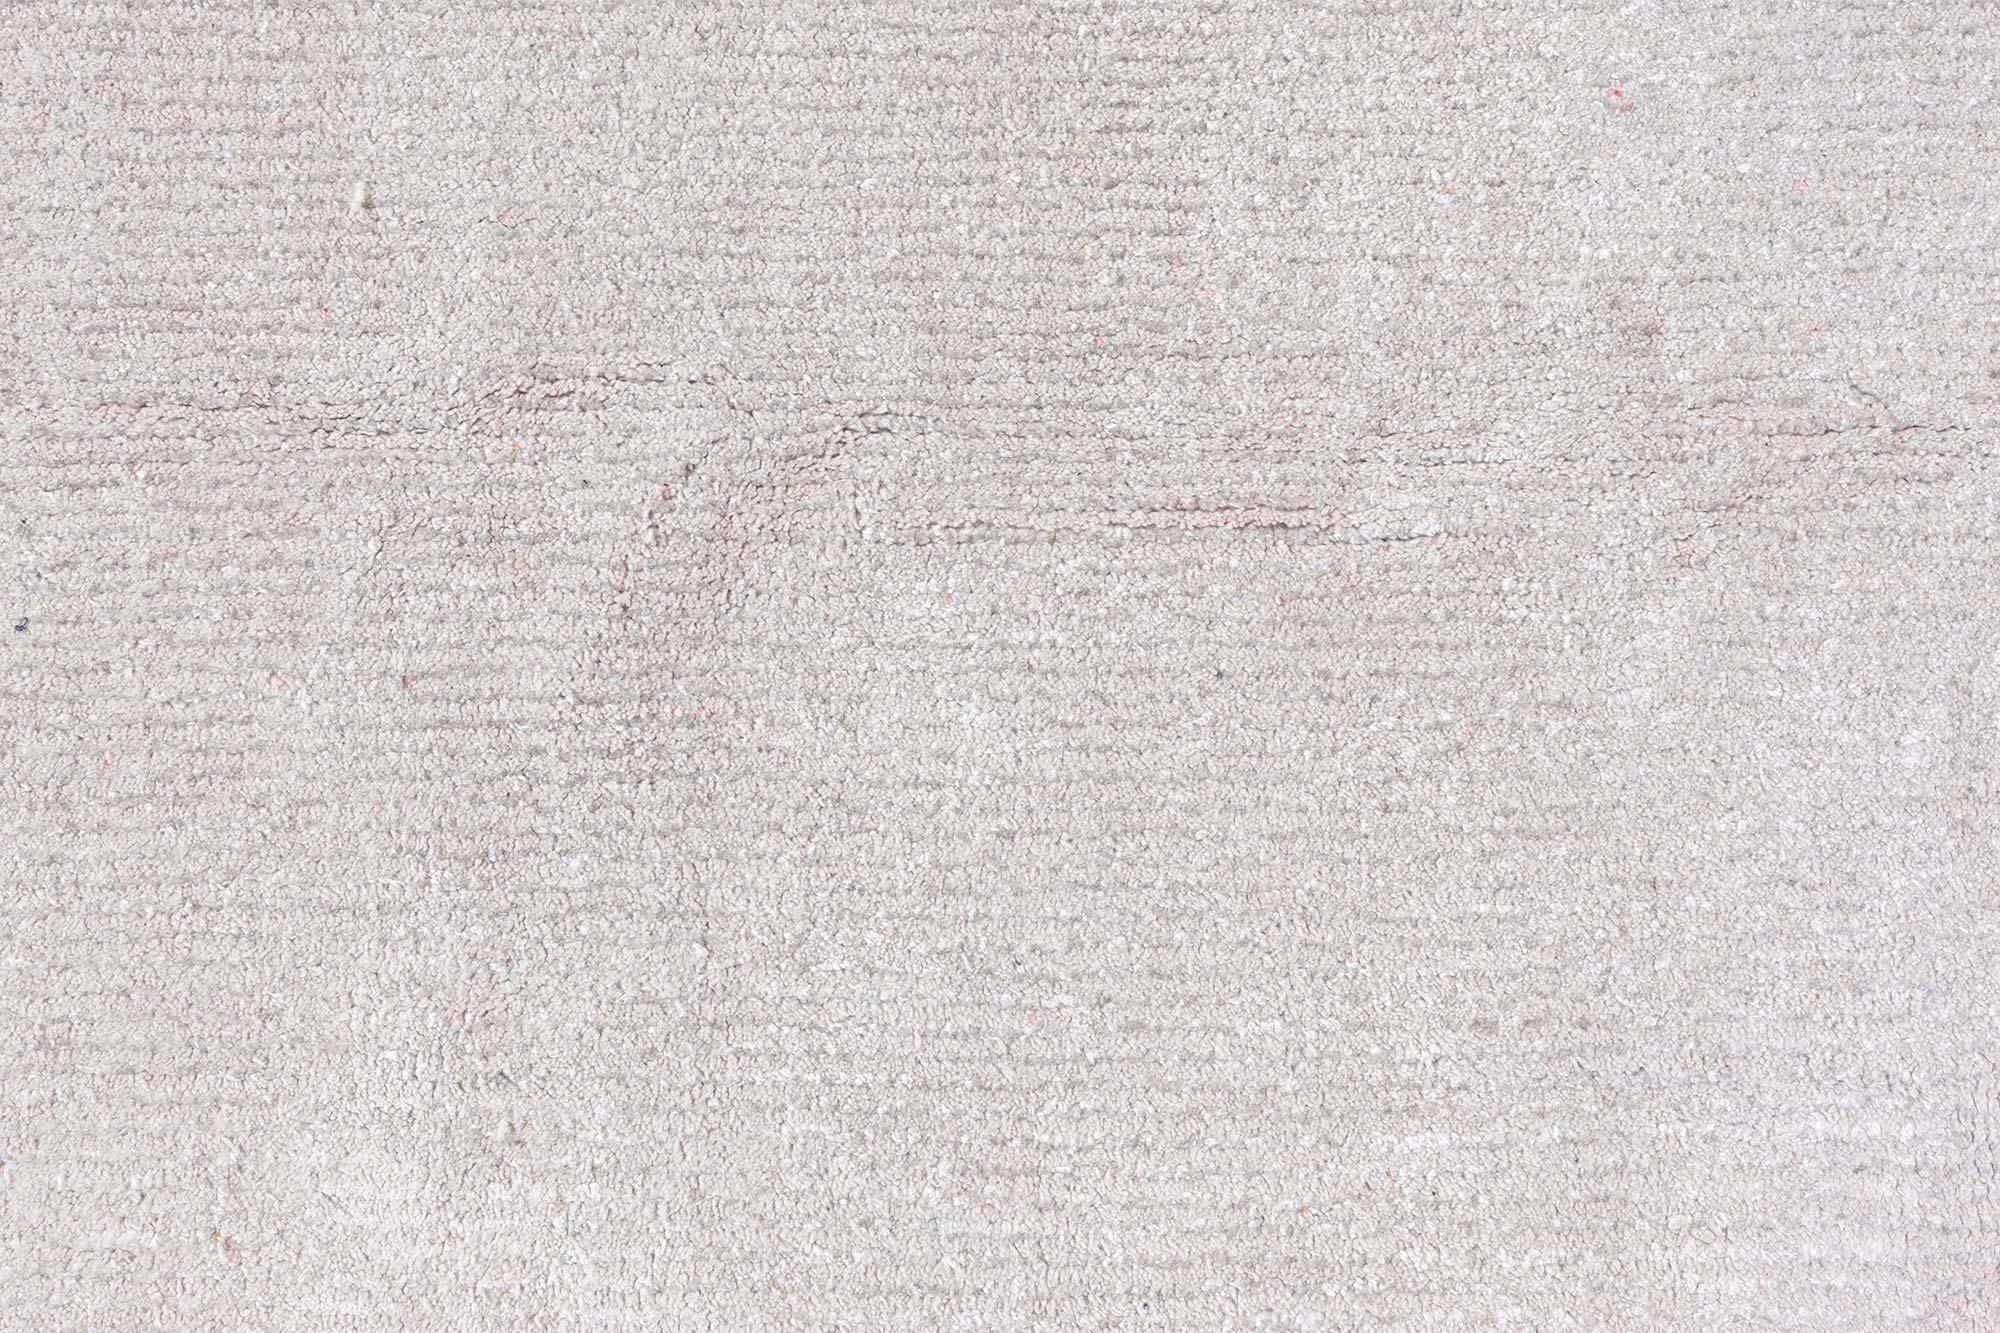 Contemporary beige handmade wool and silk rug by Doris Leslie Blau.
Size: 8'0